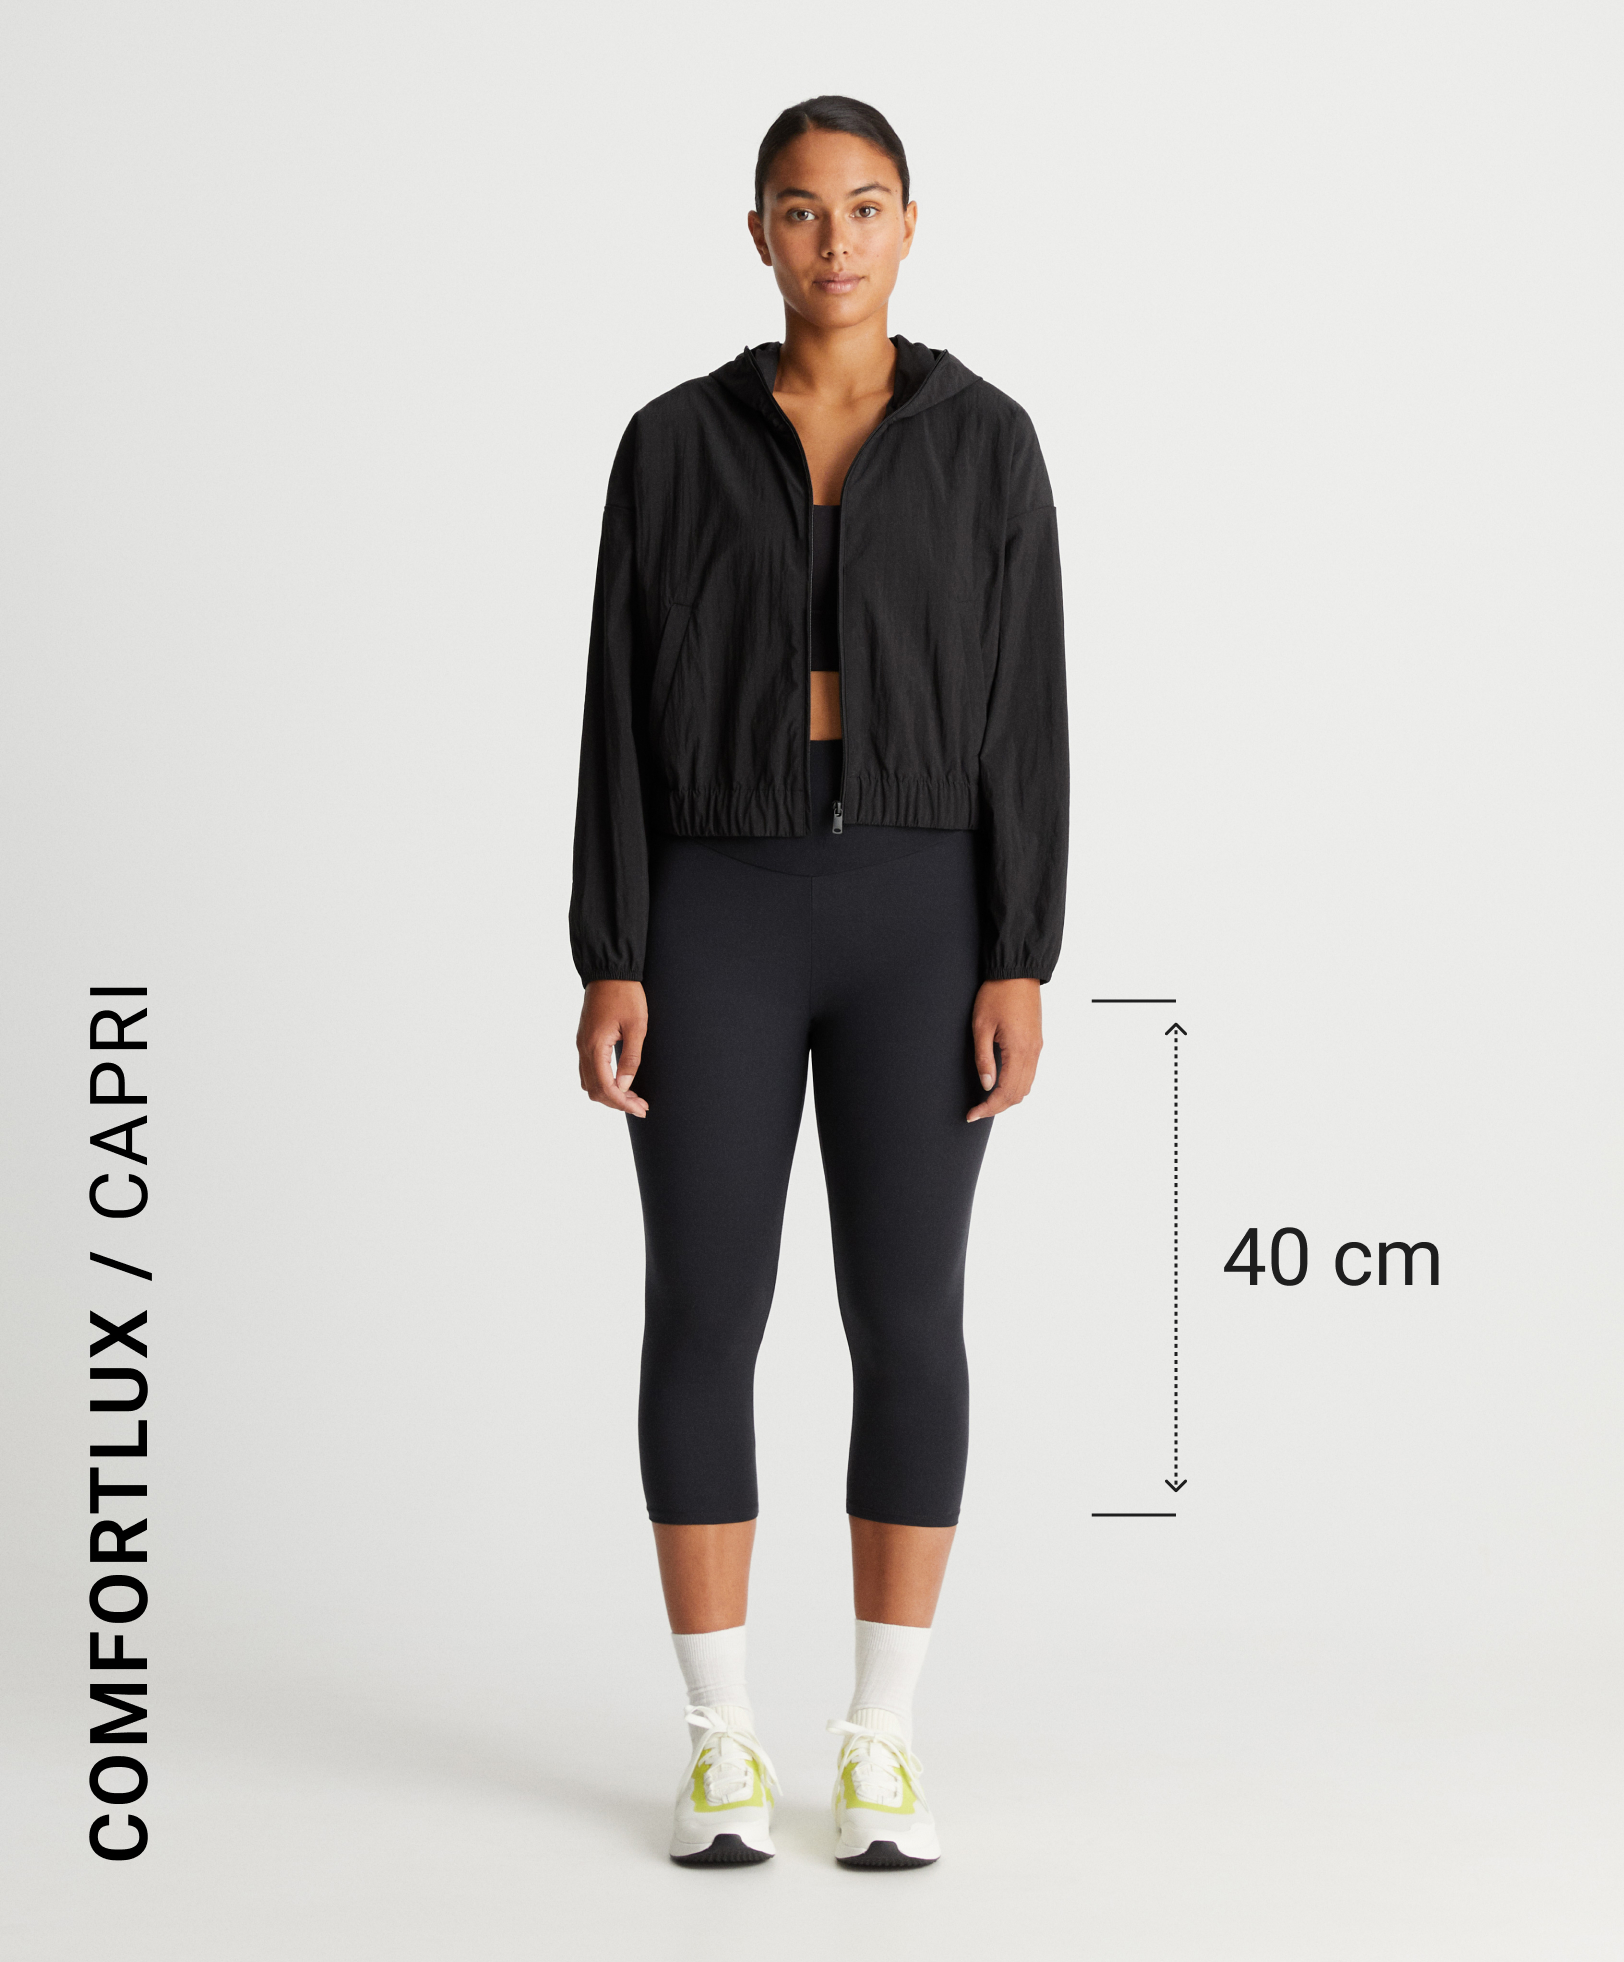 Cropped leggings, high rise, comfortlux, 55 cm